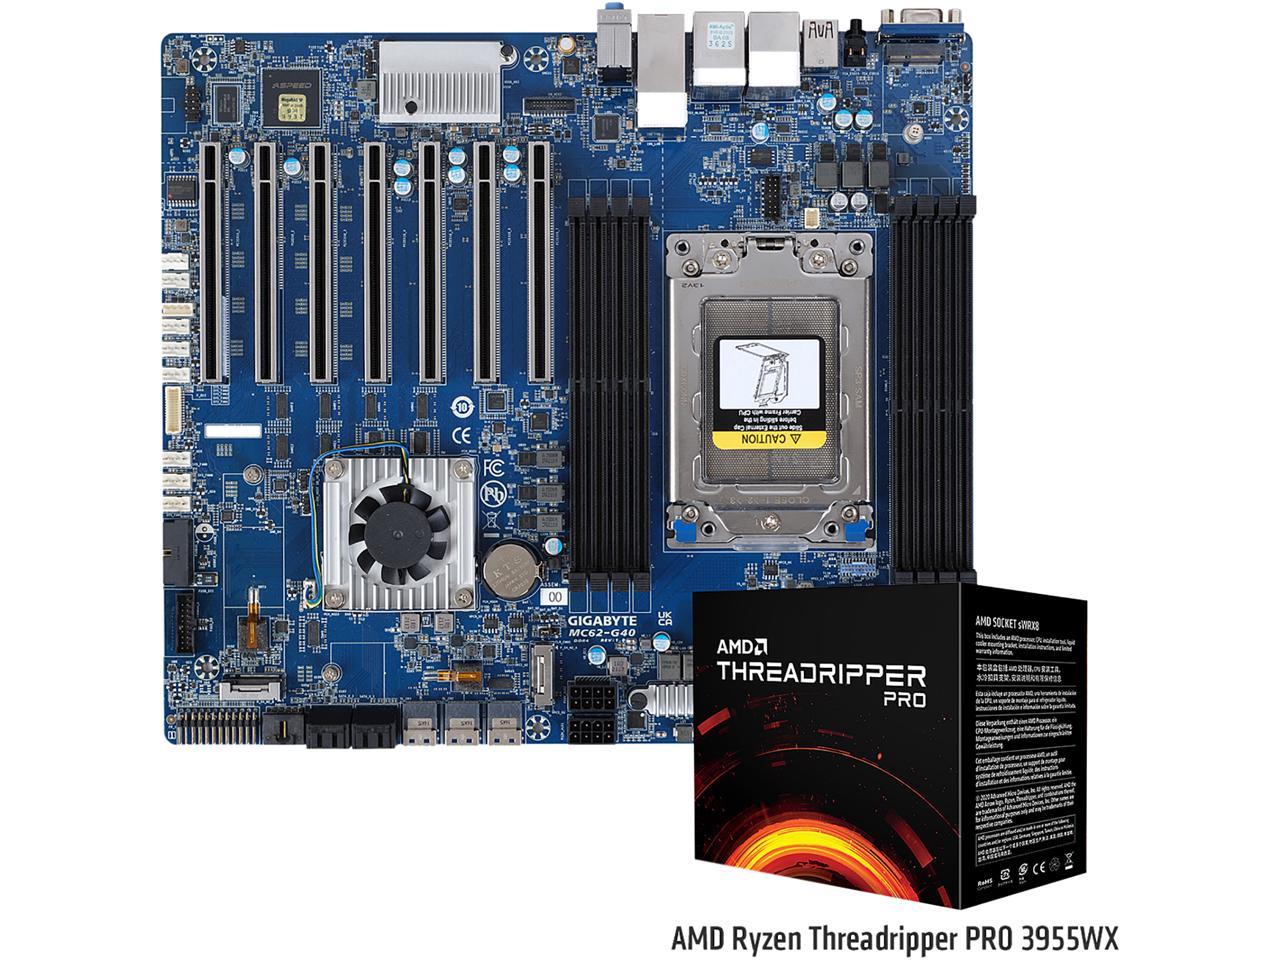 Gigabyte MC62-G40 Motherboard + AMD Threadripper Pro 3955WX CPU $1198 + Free Shipping